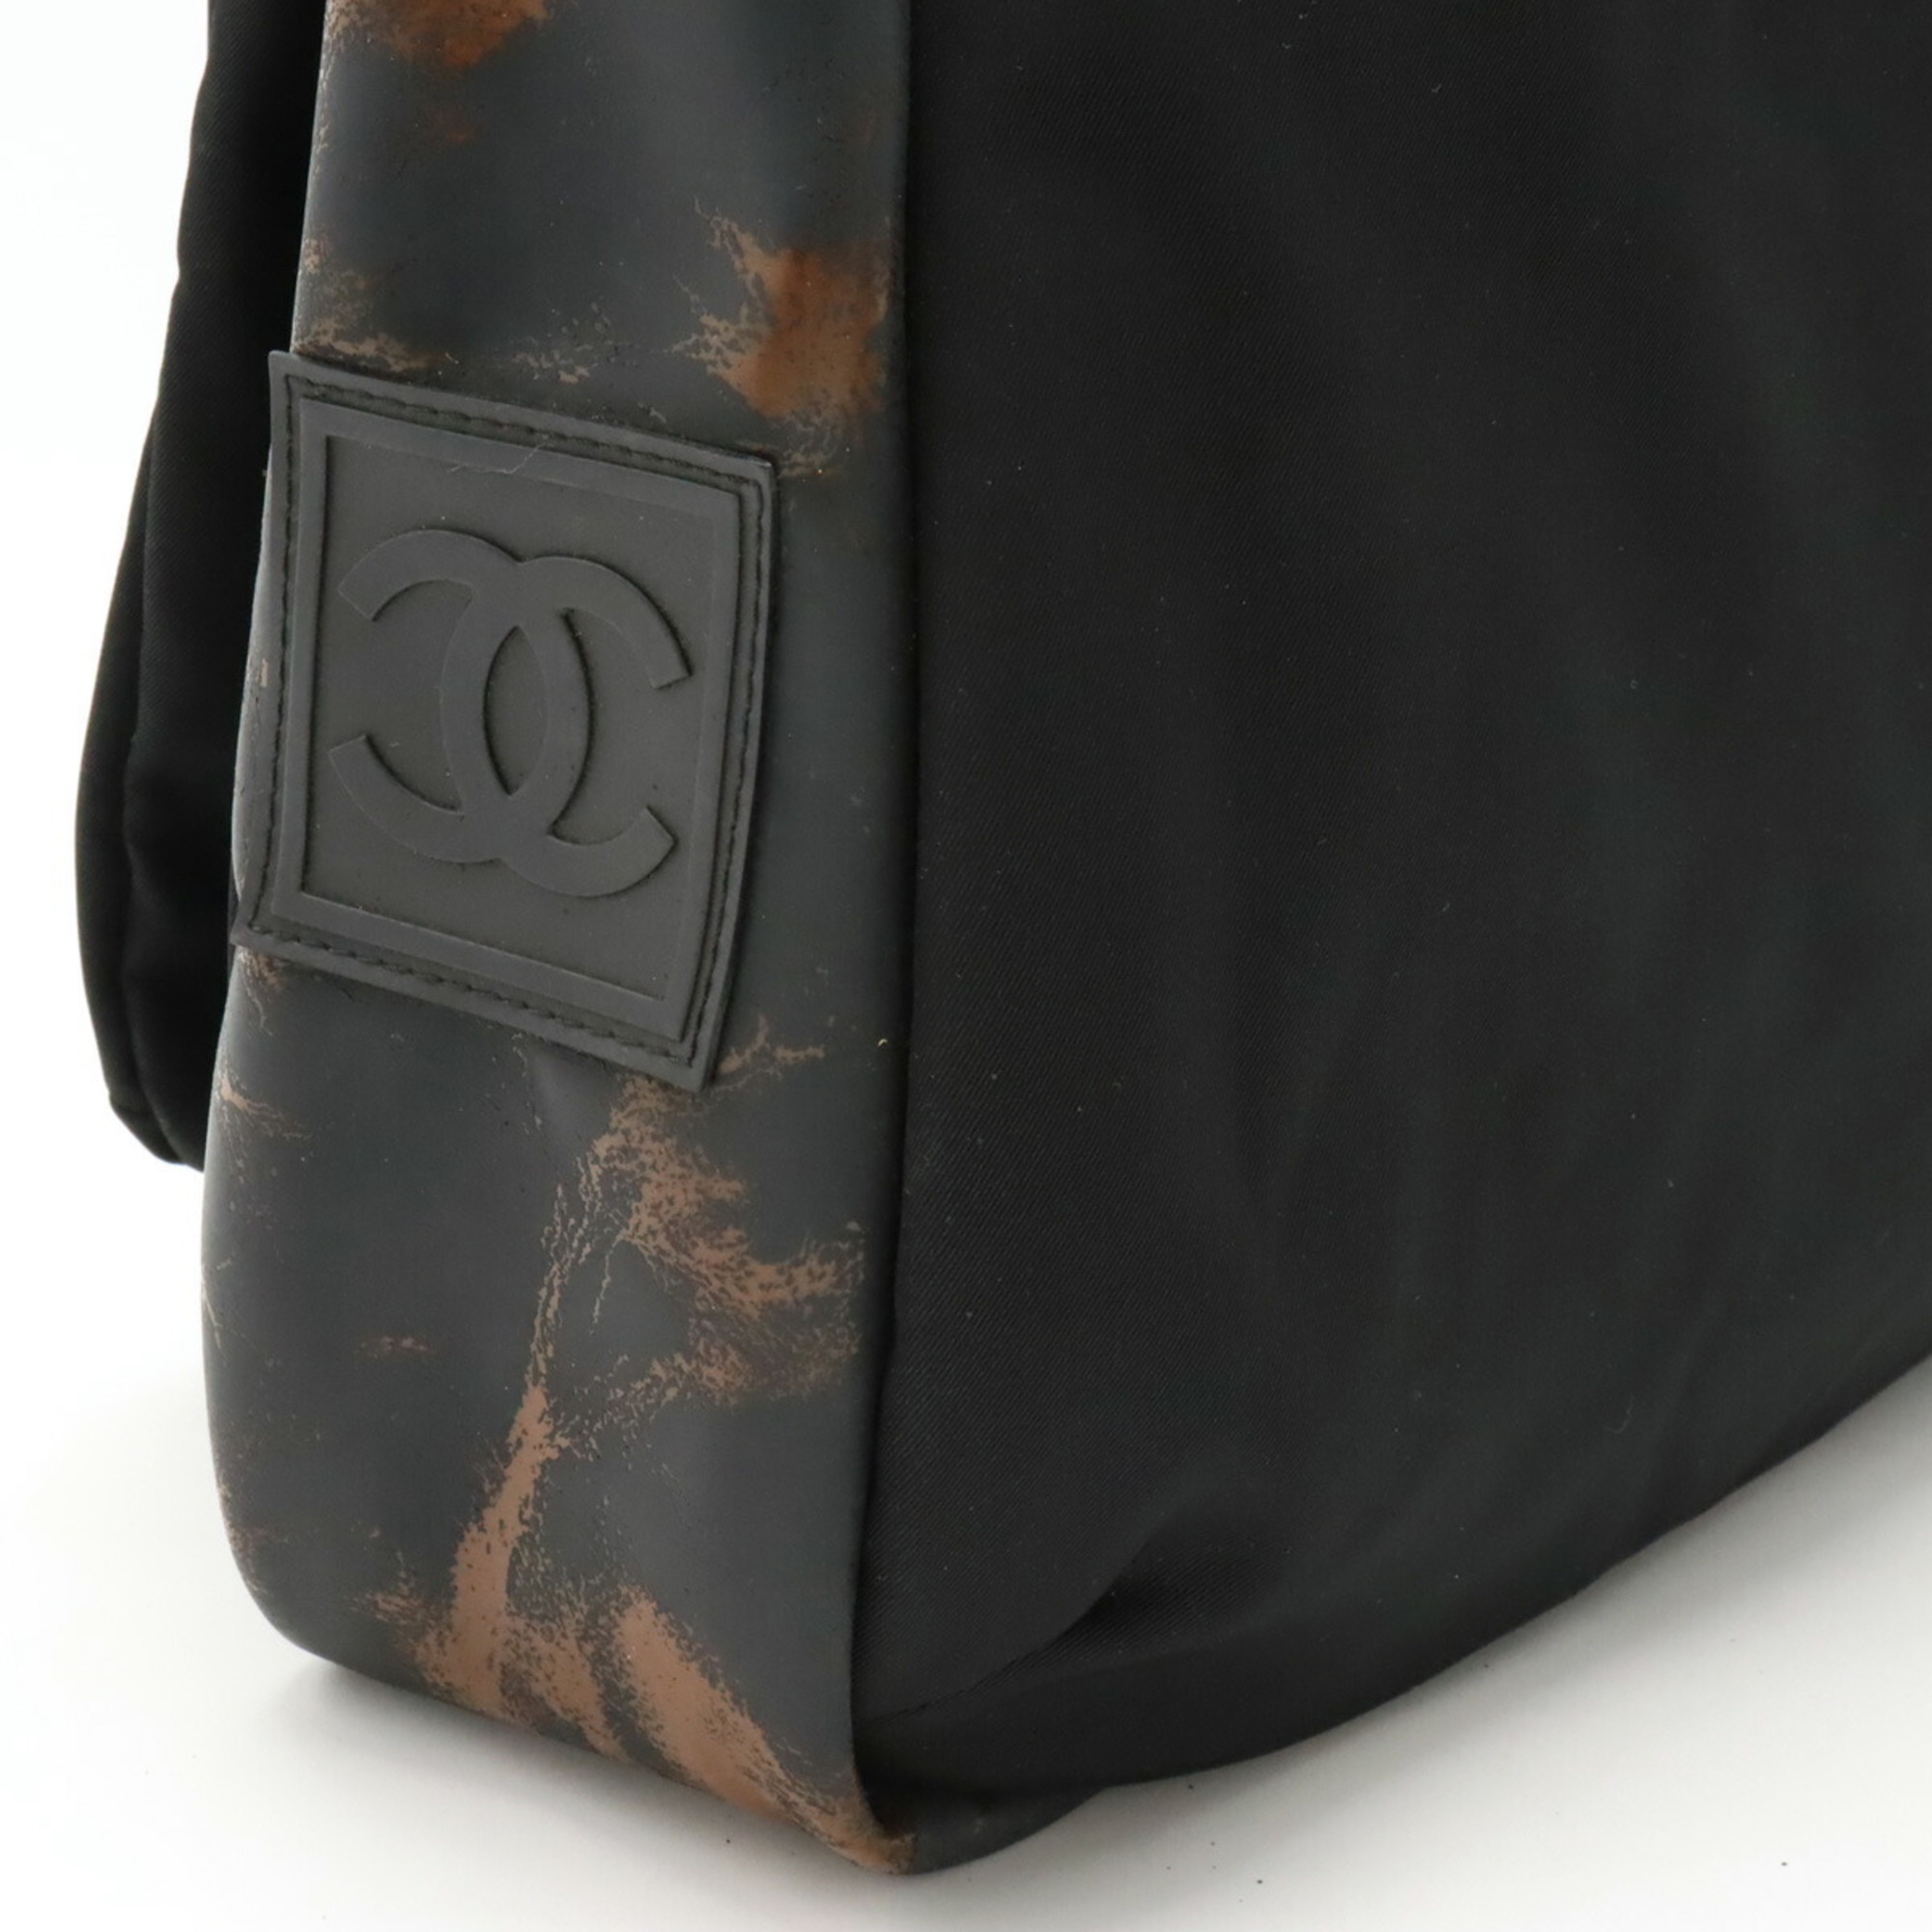 CHANEL Chanel Sport Line Coco Mark Shoulder Bag Nylon Rubber Black Neon Yellow A26709